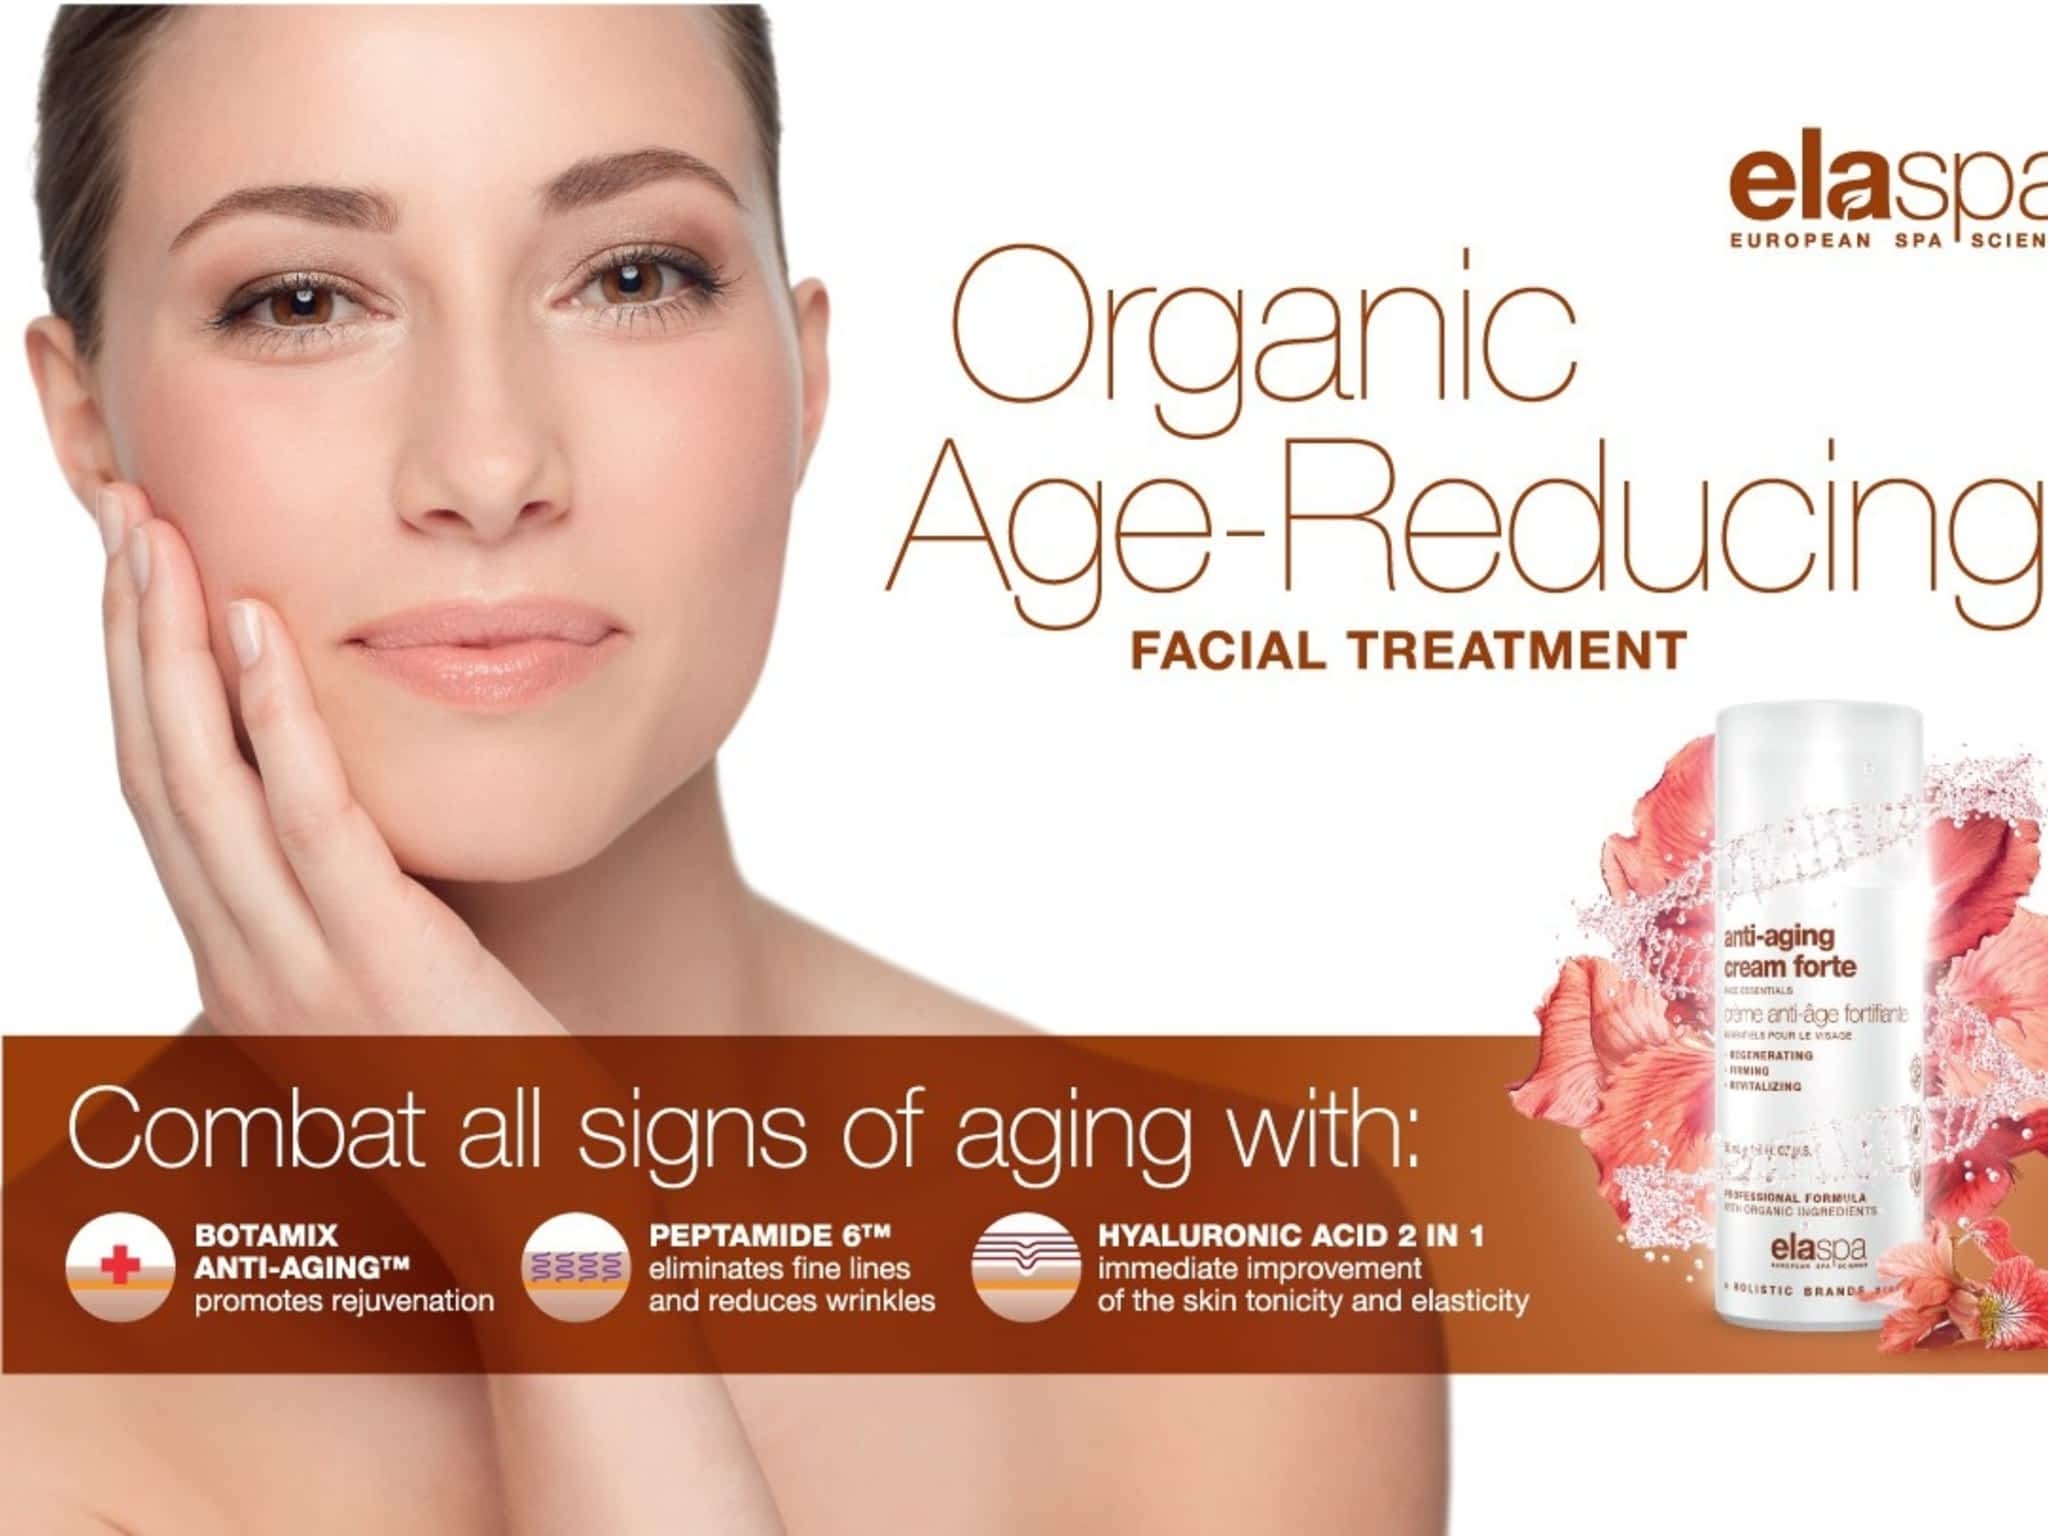 photo Magnolia Regeneration Skin & Body Clinic Inc